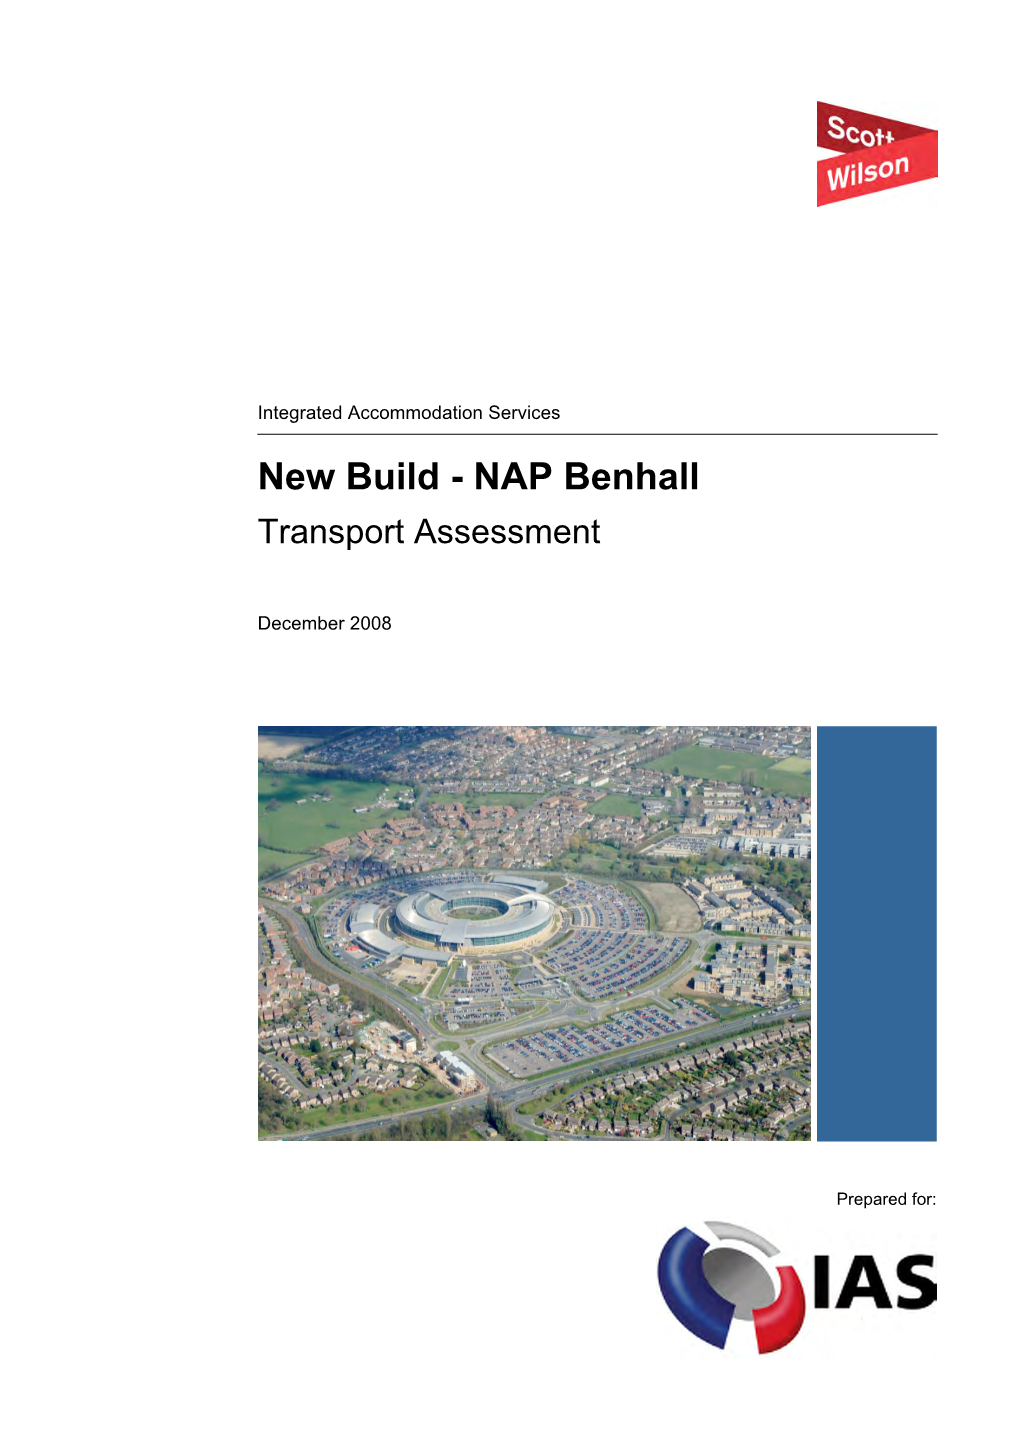 New Build - NAP Benhall Transport Assessment